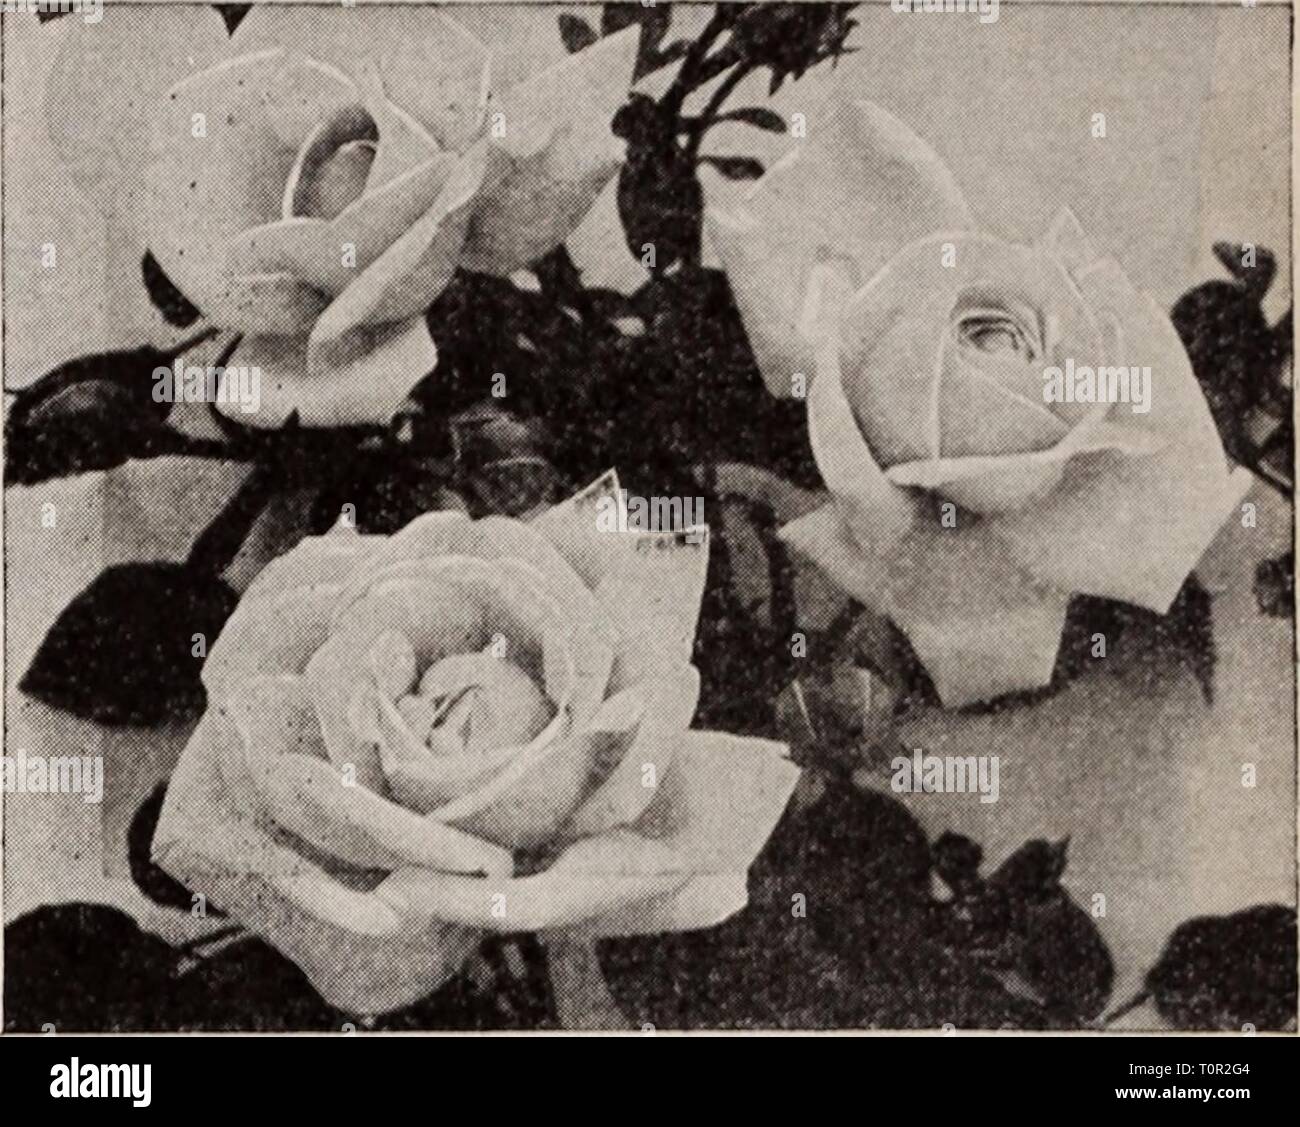 Climbing rose albertine -Fotos und -Bildmaterial in hoher Auflösung – Alamy